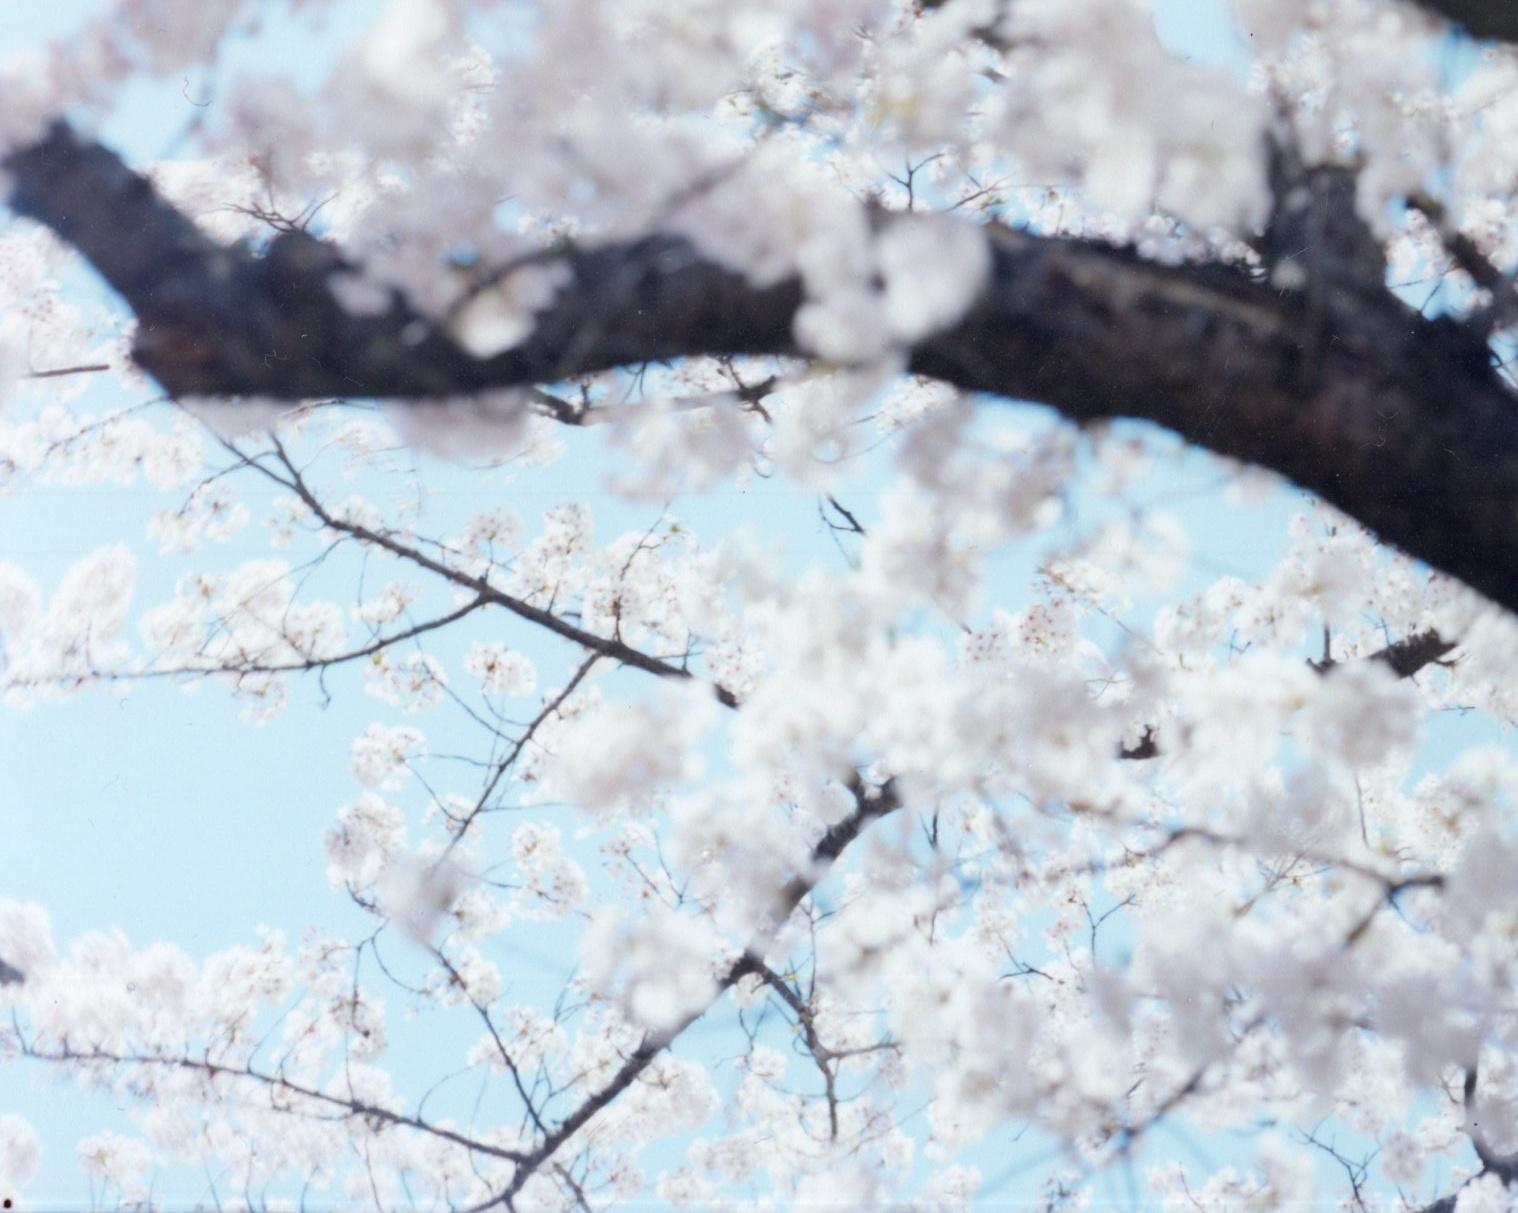 RISAKU SUZUKI (*1963, Japan)
SAKURA 10,4-64
2021
Chromogenic print
Sheet 120 x 150 cm (47 1/4 x 59 1/8 in.) 
Edition of 5; Ed. no. 1/5
Framed

The Sakura (Japanese term for ‘cherry blossoms’) Celebration commences in early spring and has inspired